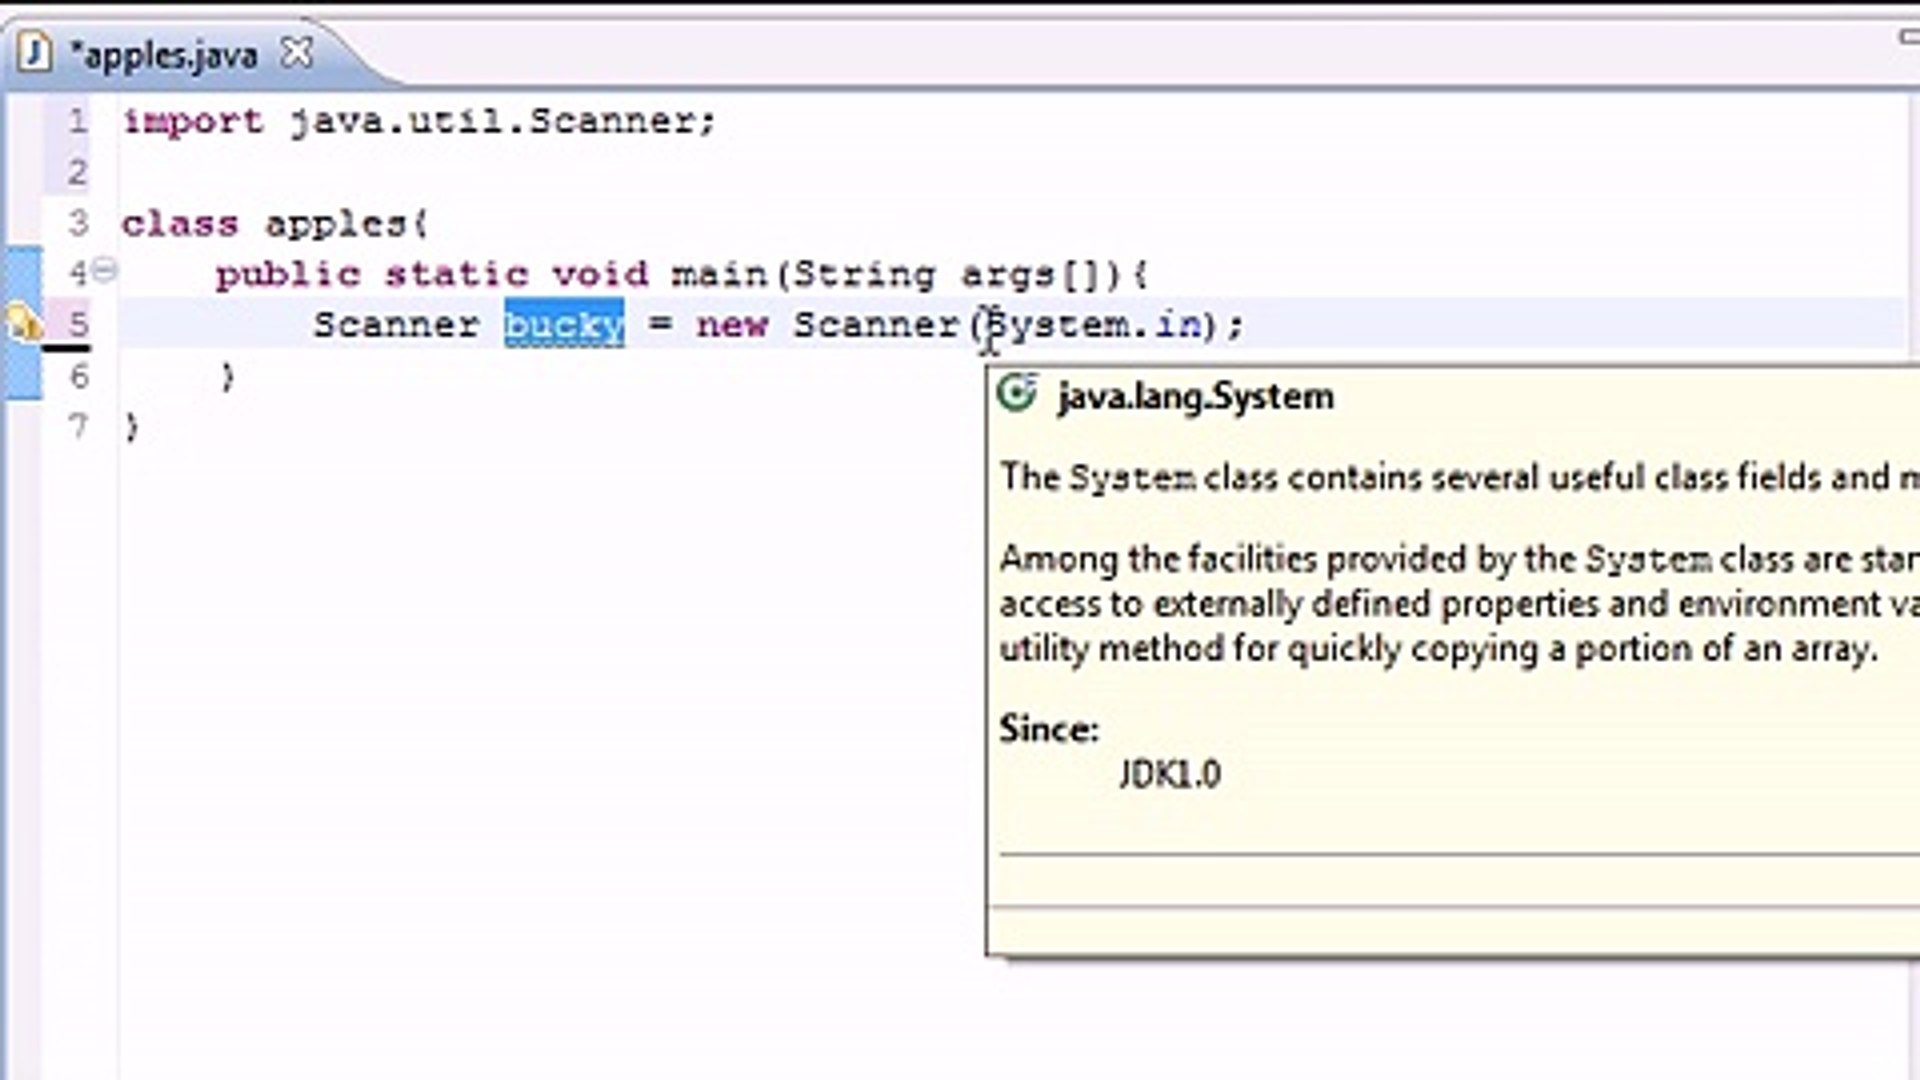 Java Programming Tutorial - 6 - Getting User Input-1